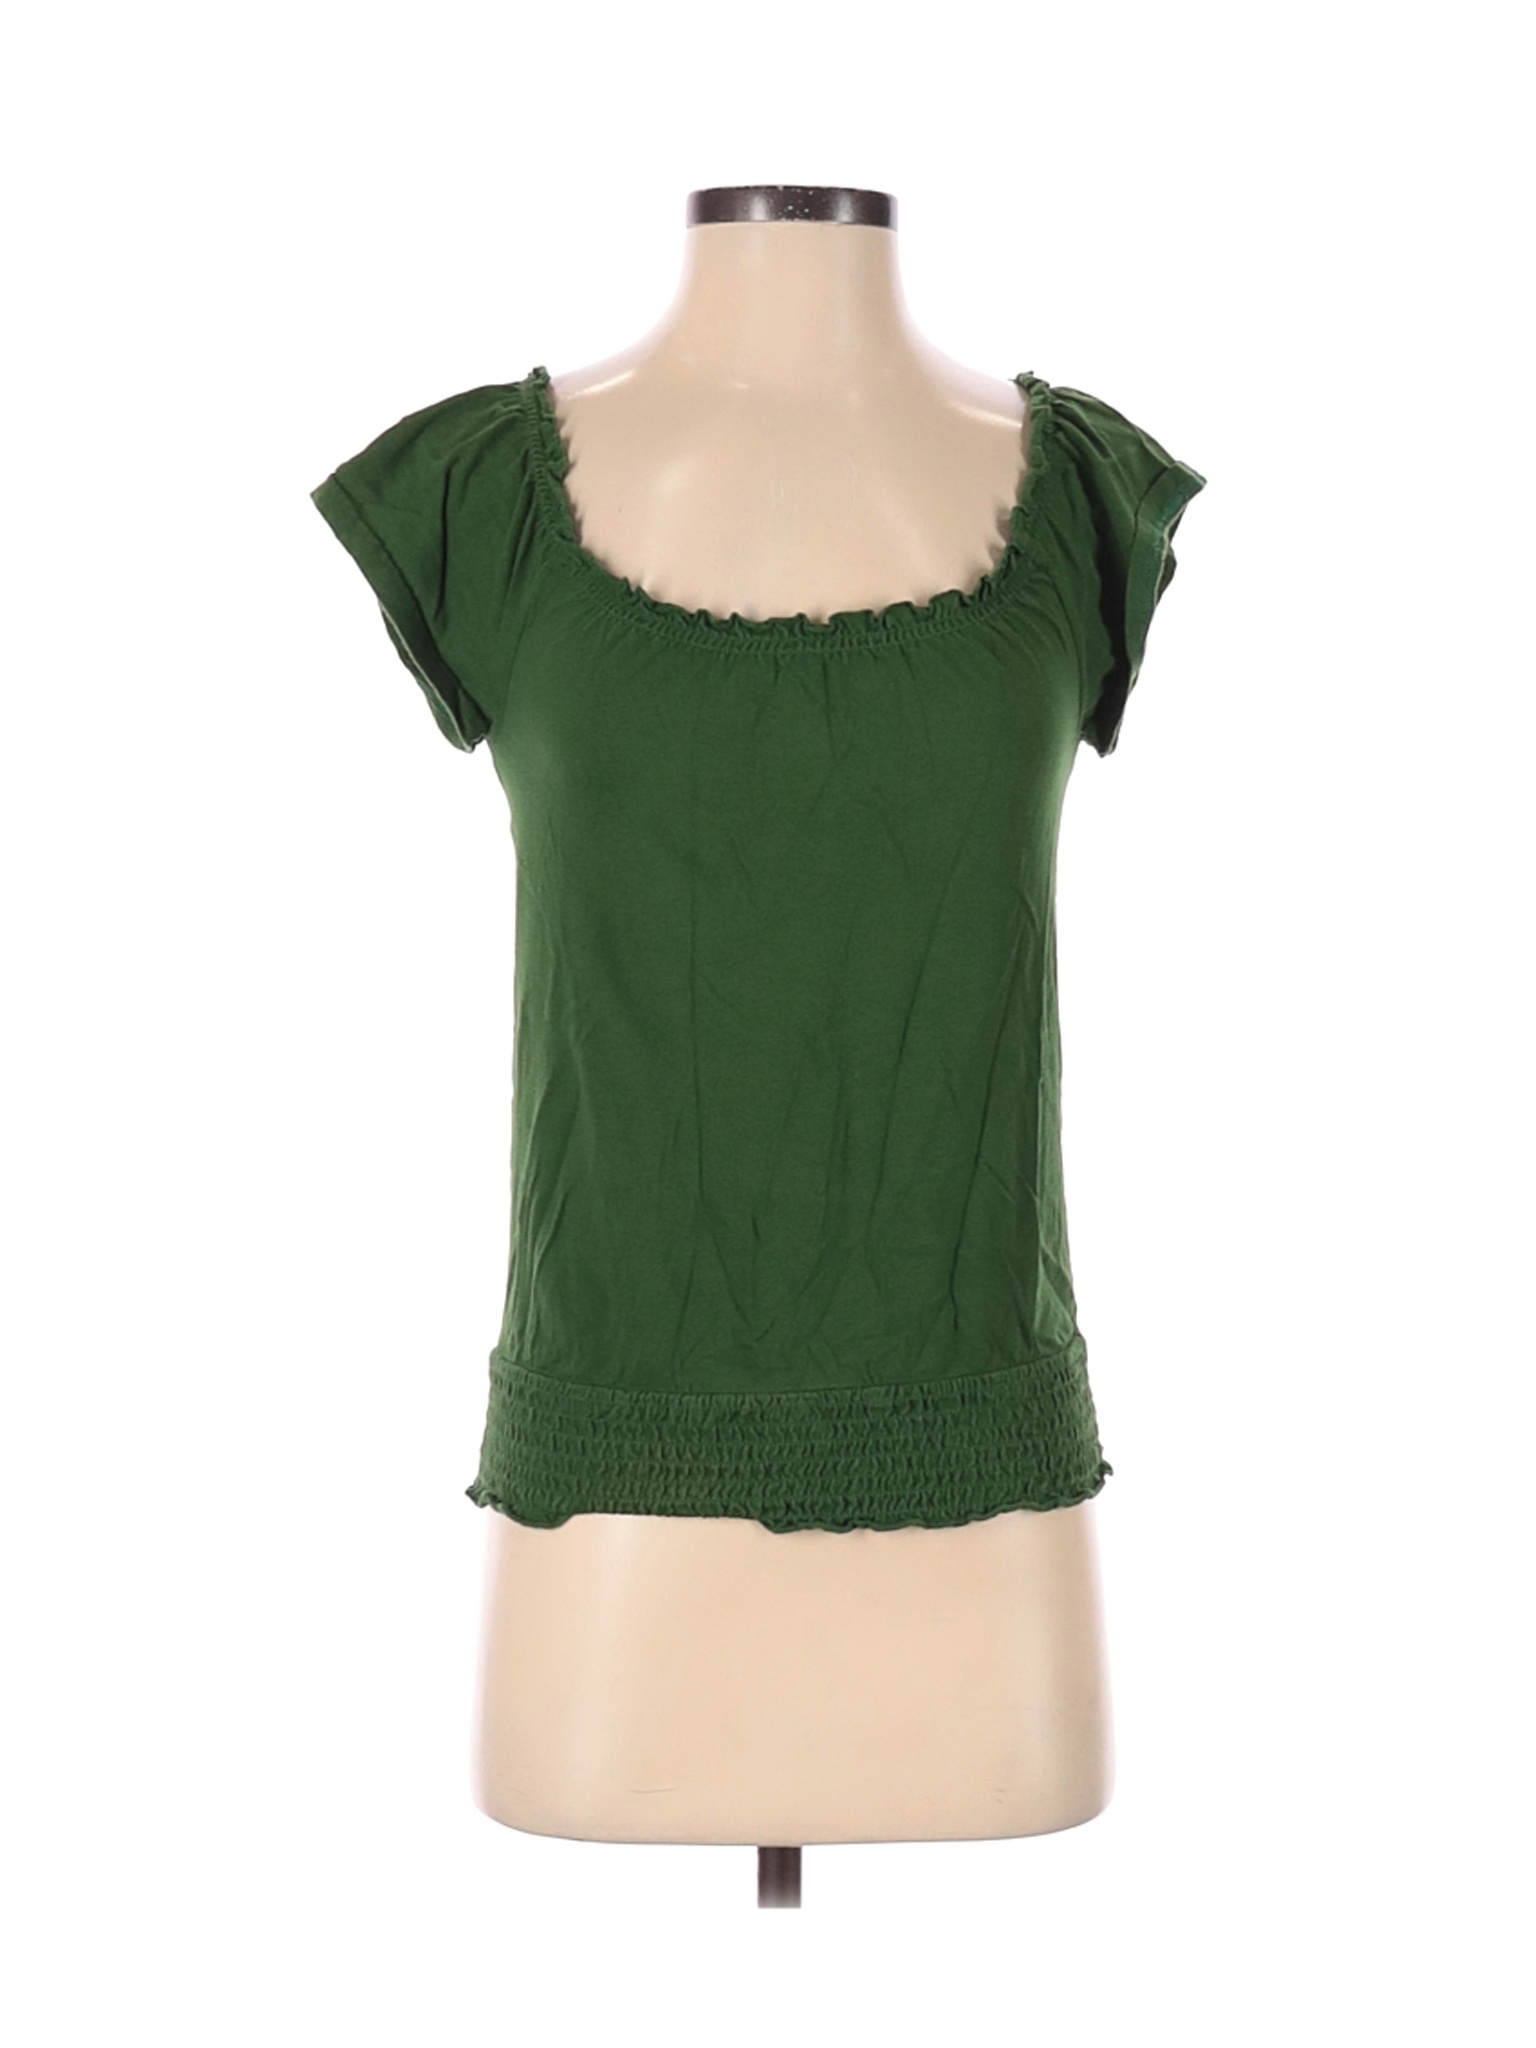 Old Navy Women Green Short Sleeve Top XS | eBay